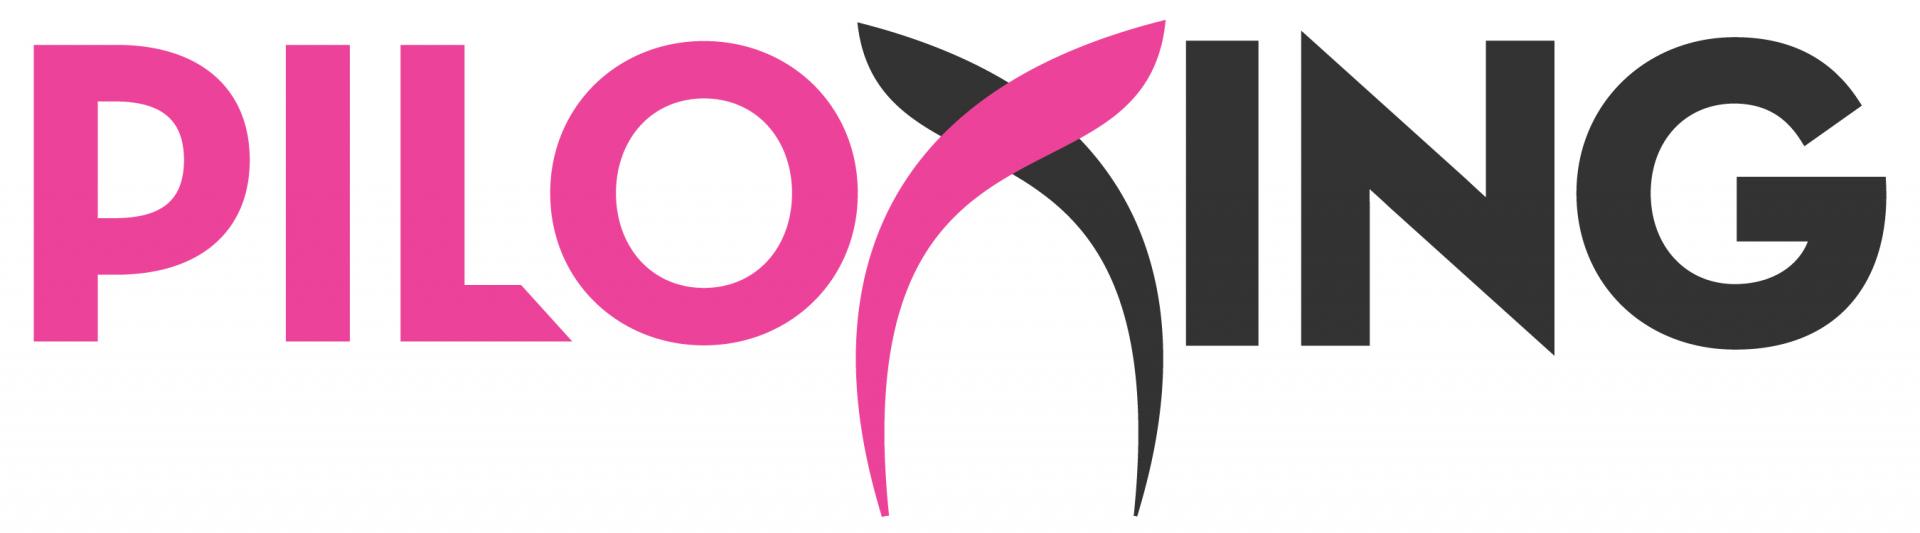 Piloxing logo